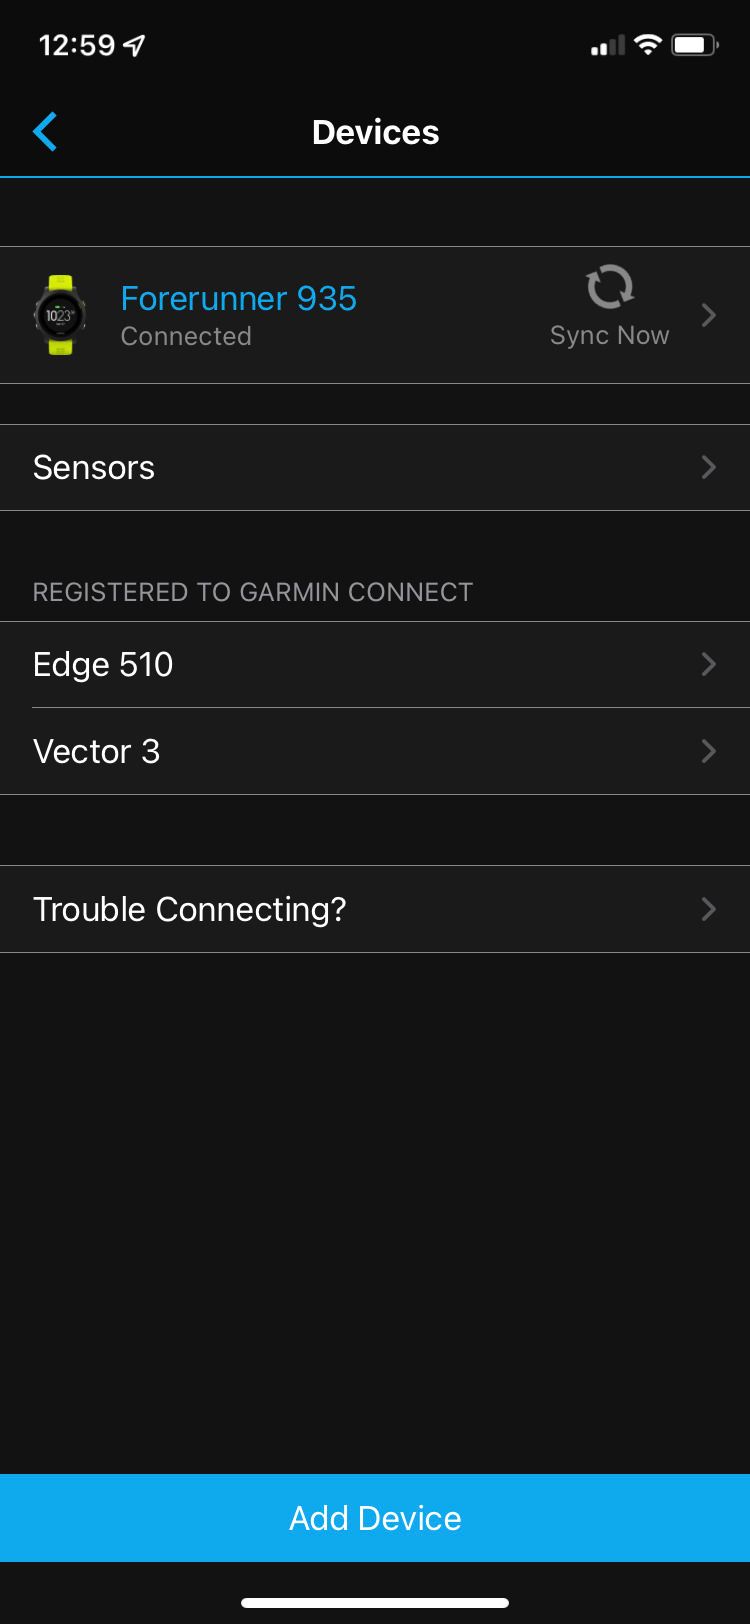 Garmin Connect App Devices